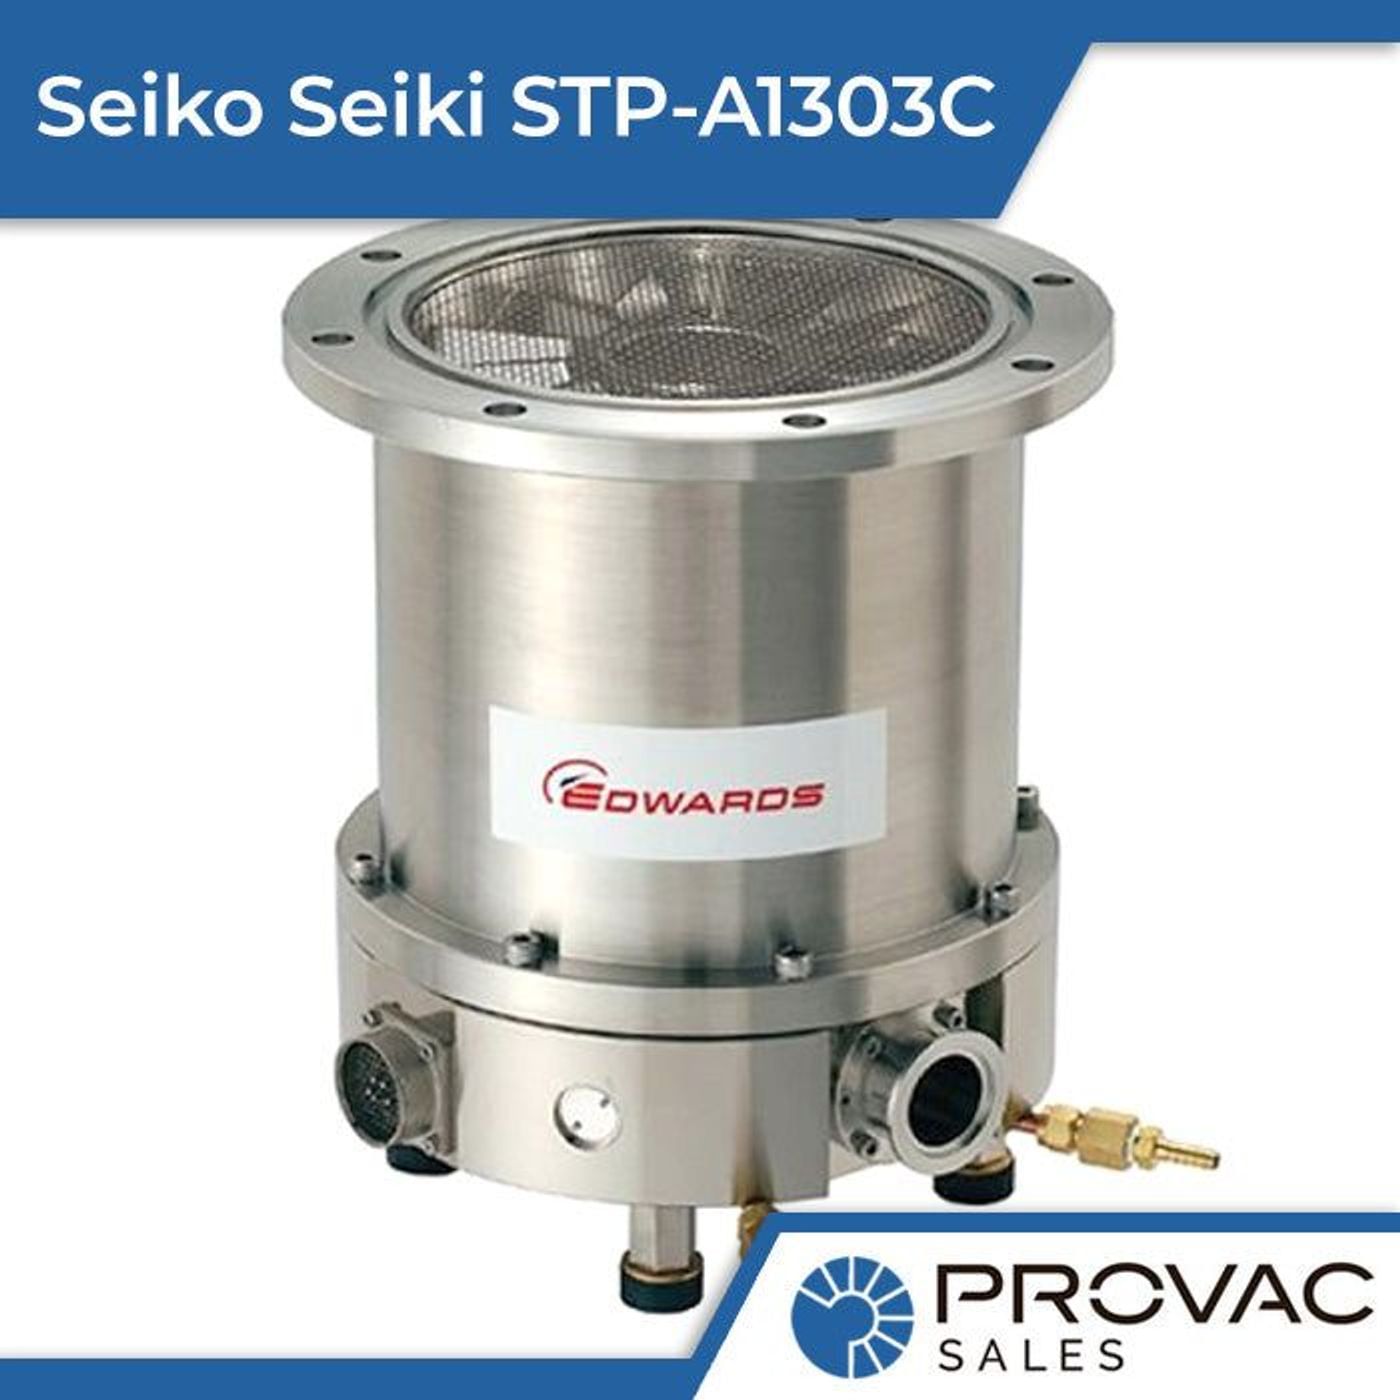 Seiko Seiki STP-A1303C Turbomolecular Pump